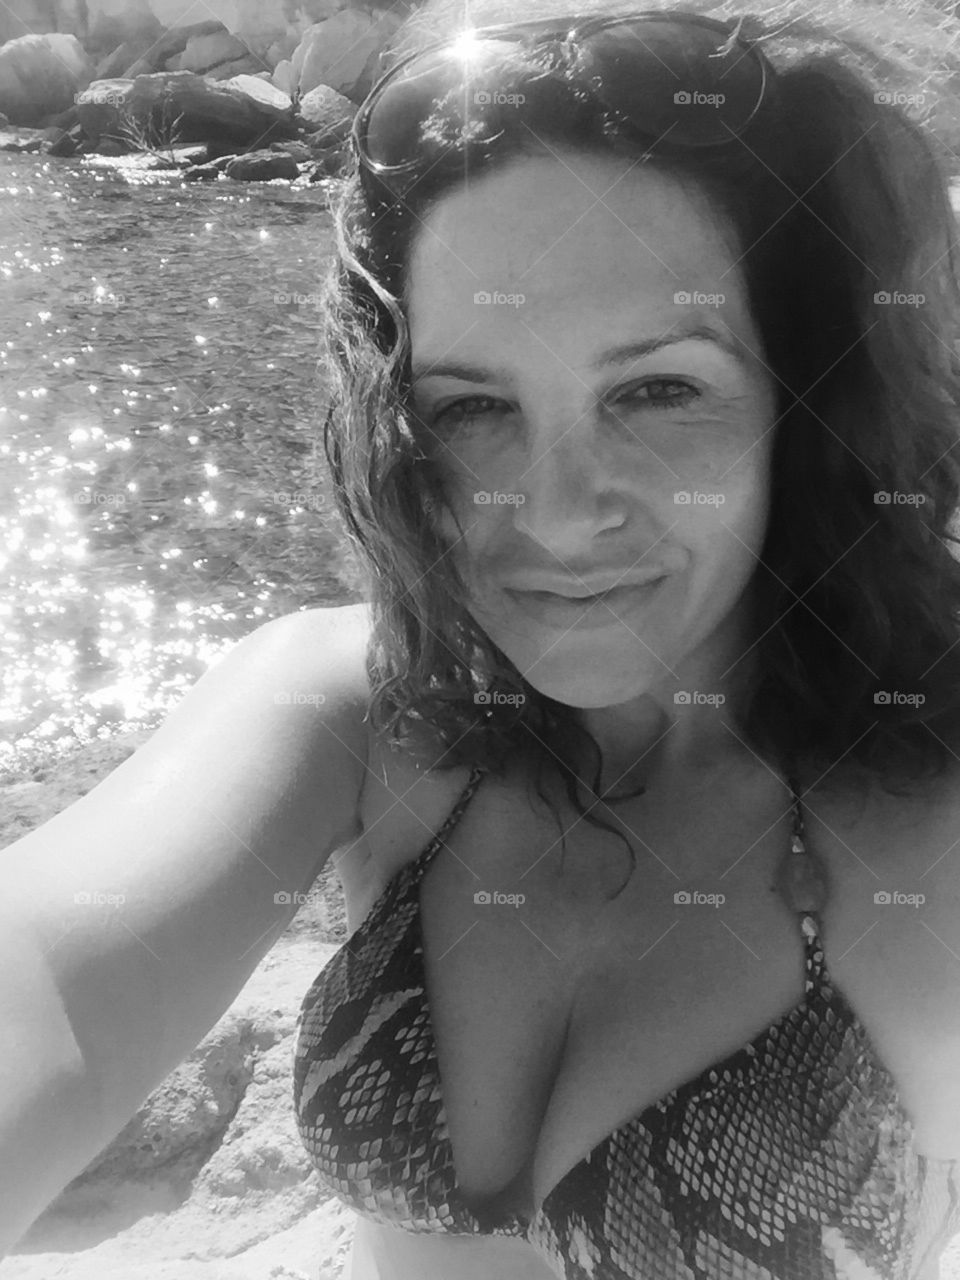 Woman beach bikini selfie black and white